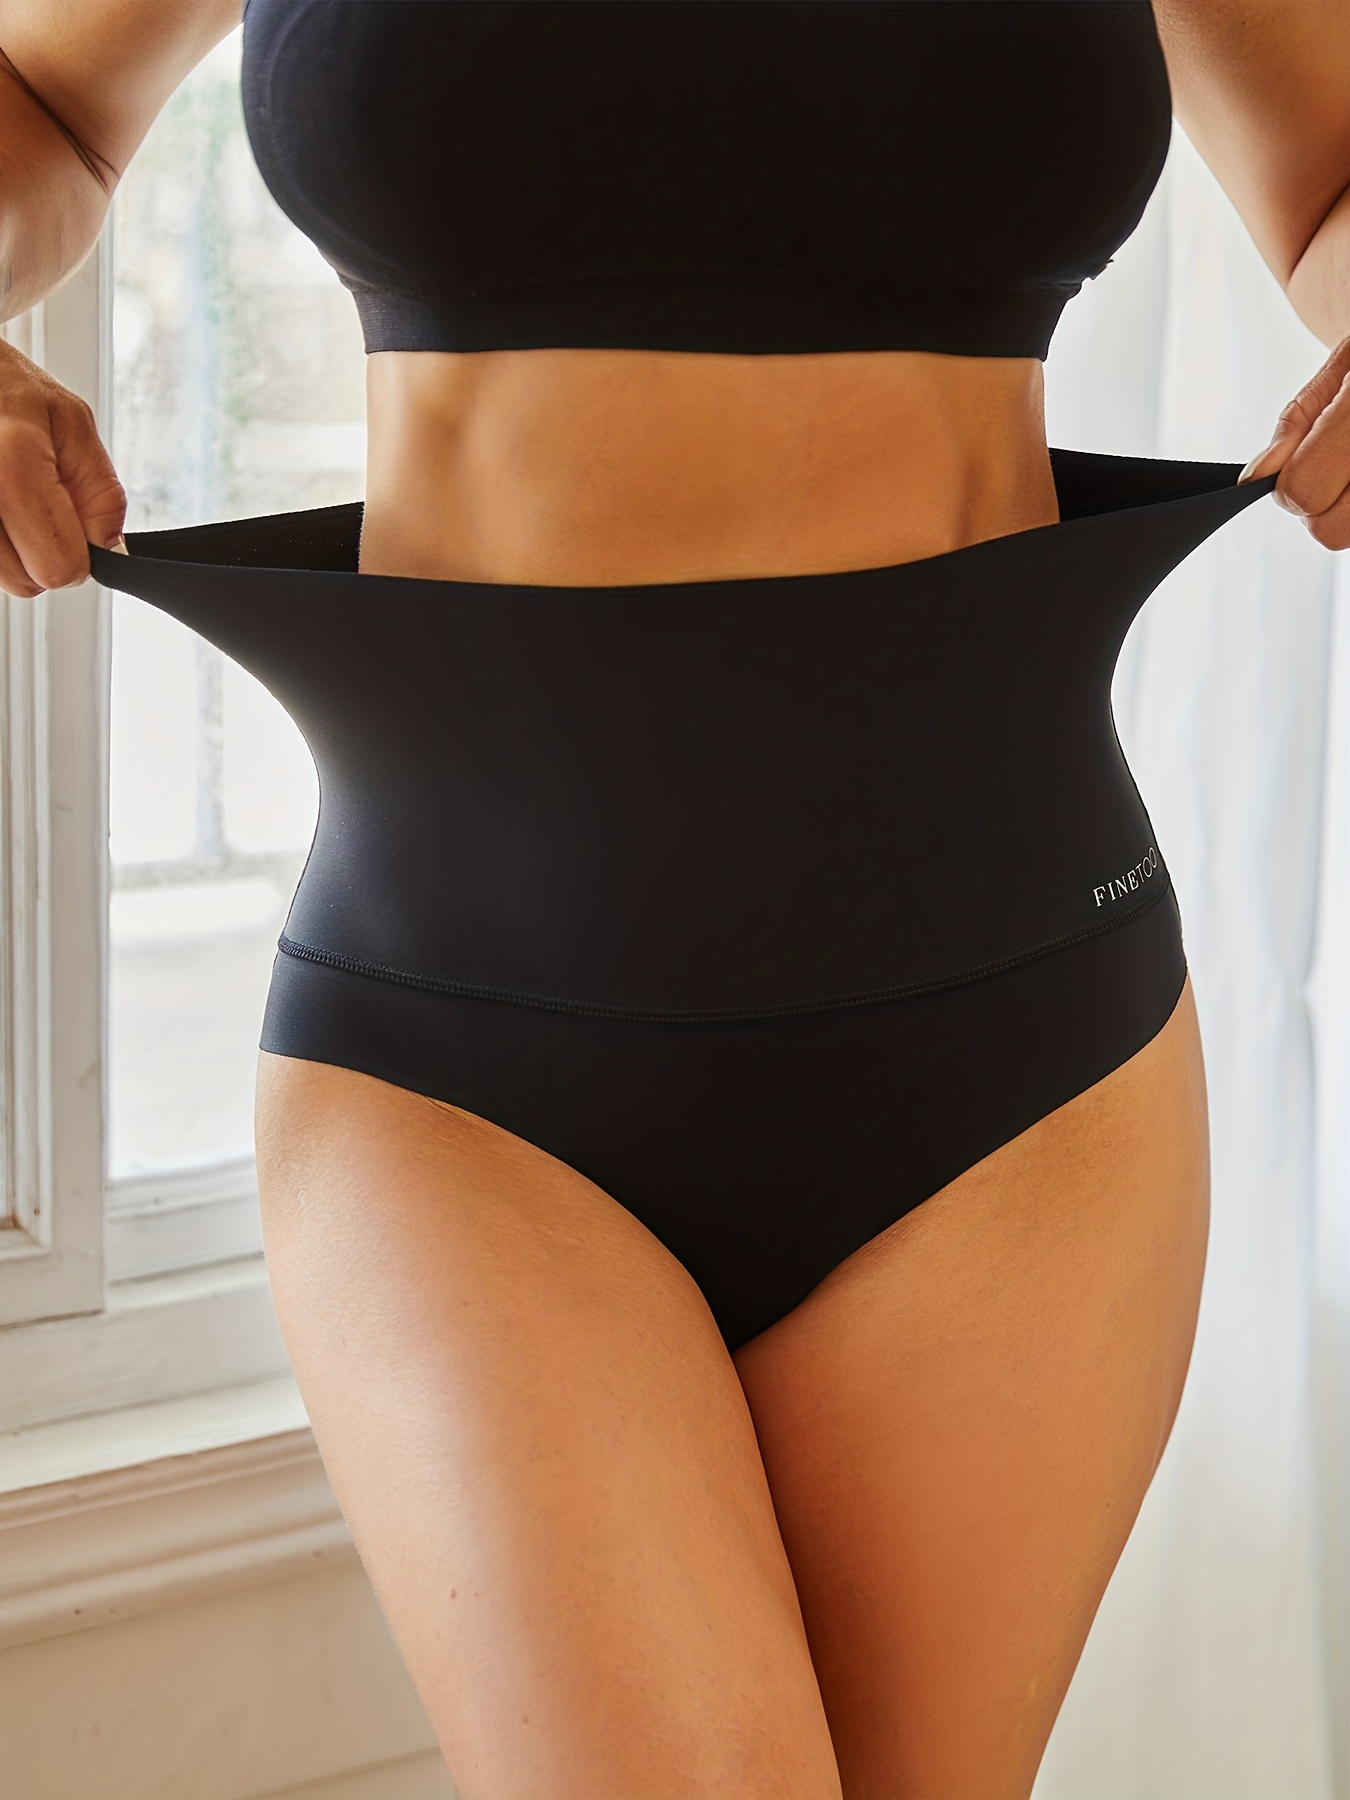 FINETOO High Waisted Thongs for Women Tummy Control Underwear Soft